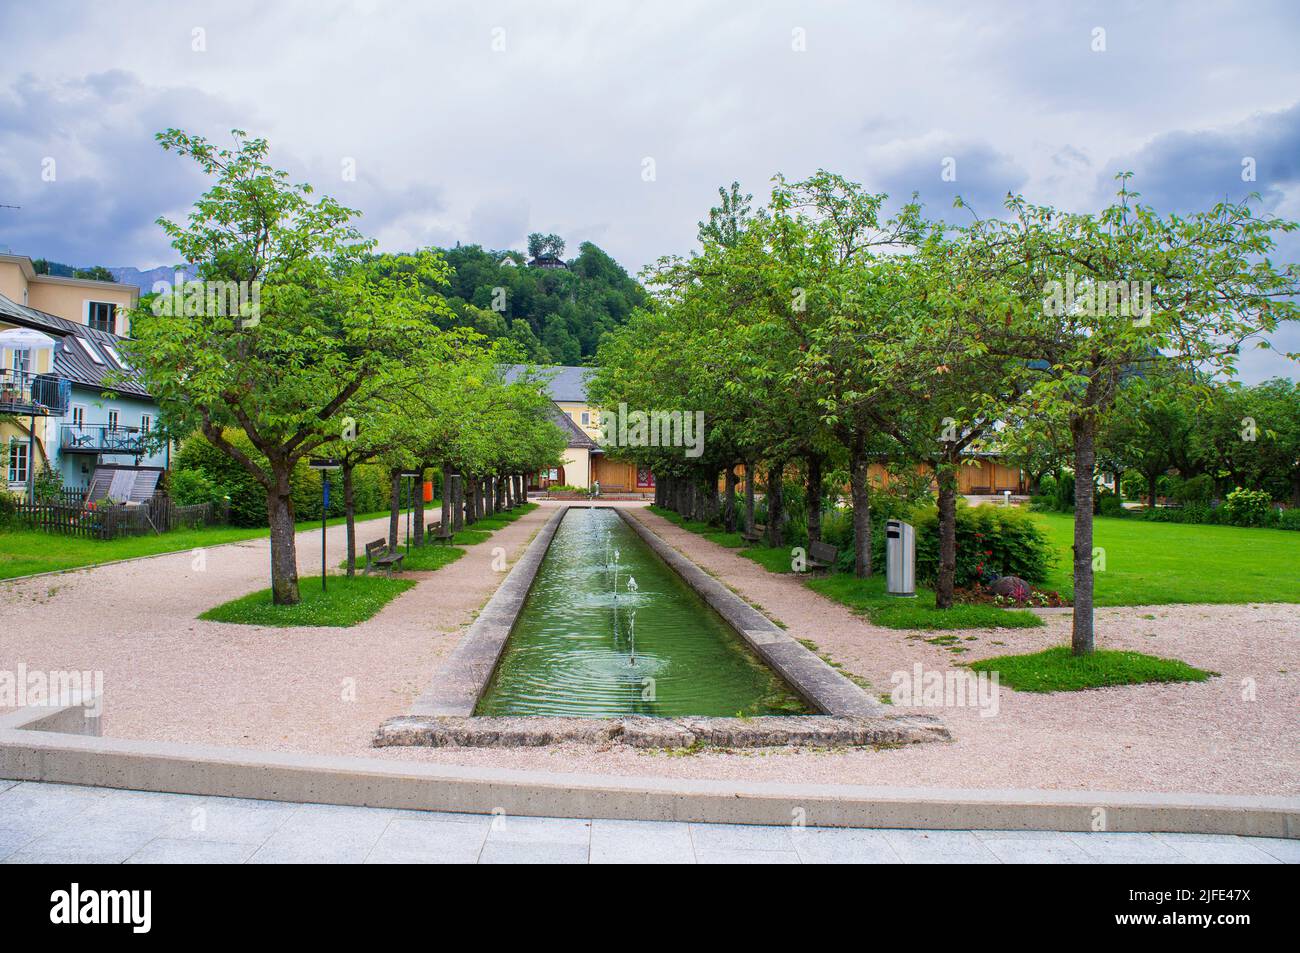 A spa garden in the town of Berchtesgaden, Berchtesgadener Land district, Upper Bavaria, Germany, on June 16, 2022. (CTK Photo/Libor Sojka) Stock Photo